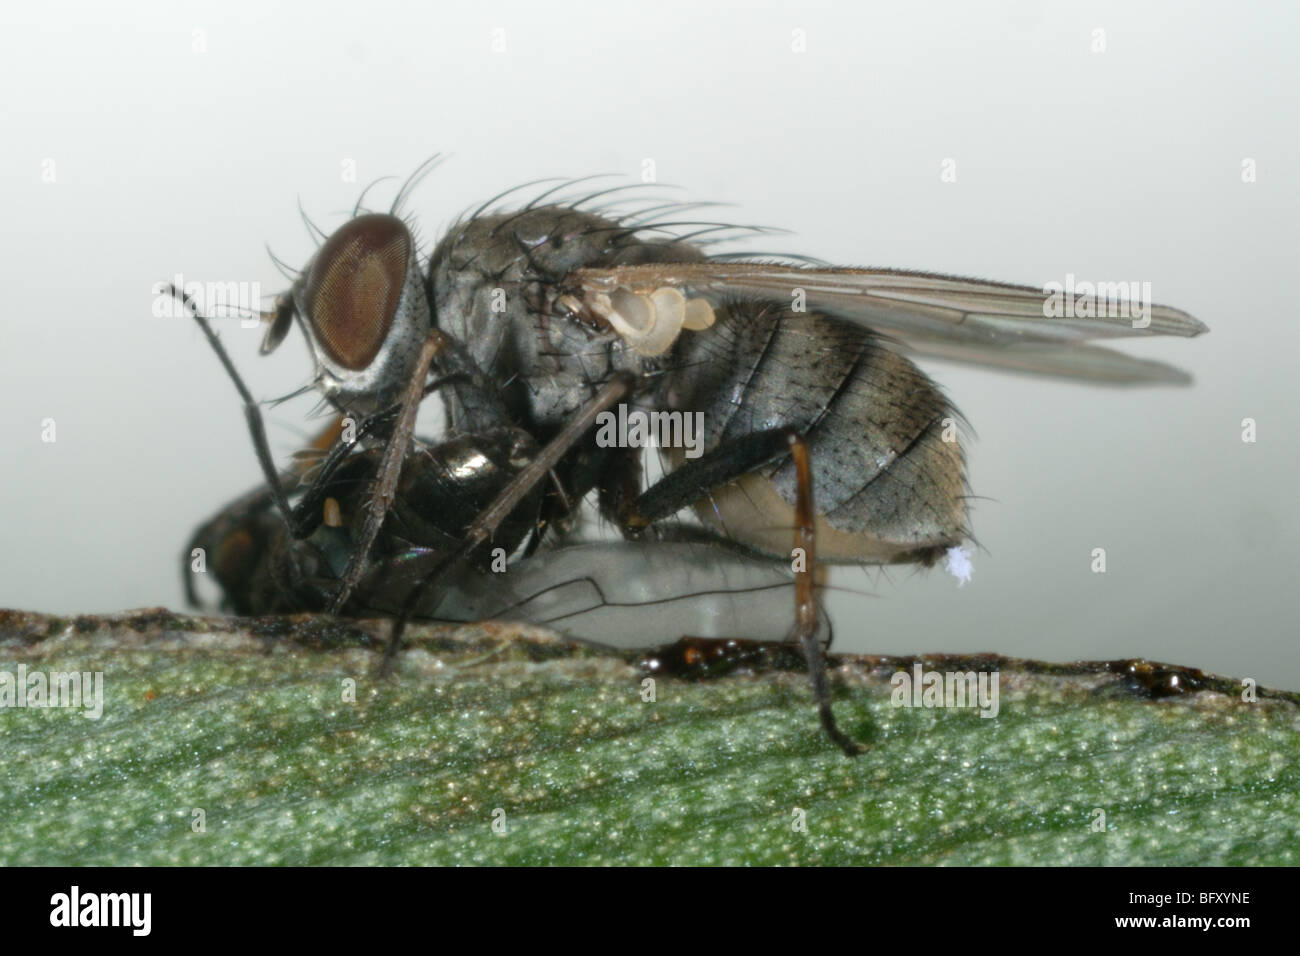 Un cazador de volar (Coenosia attenuata) alimentándose de un hongo (moscas scatella stagnalis) Foto de stock